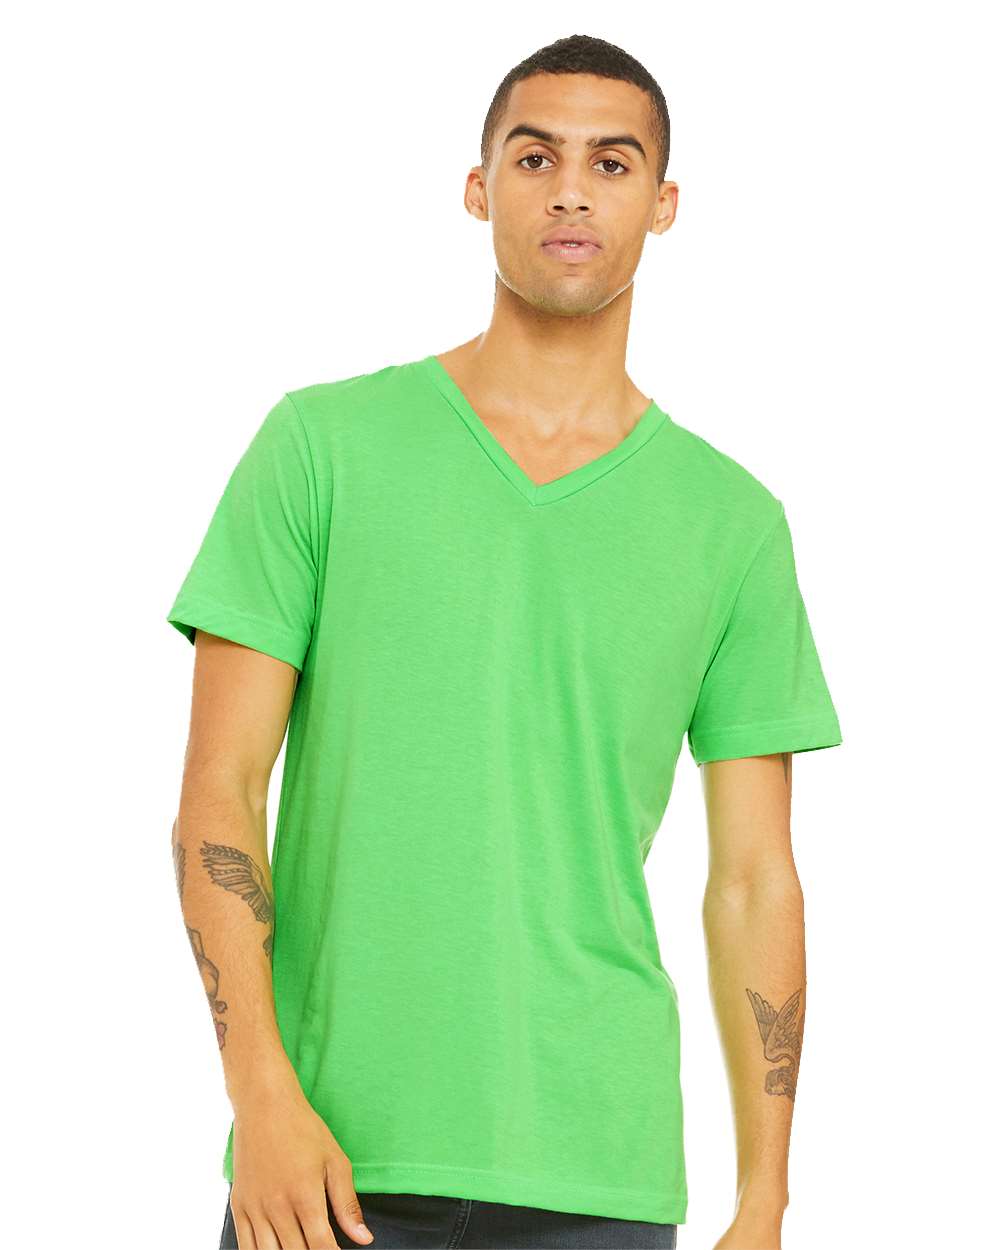 man wearing bella+canvas v-neck cvc t-shirt in neon green